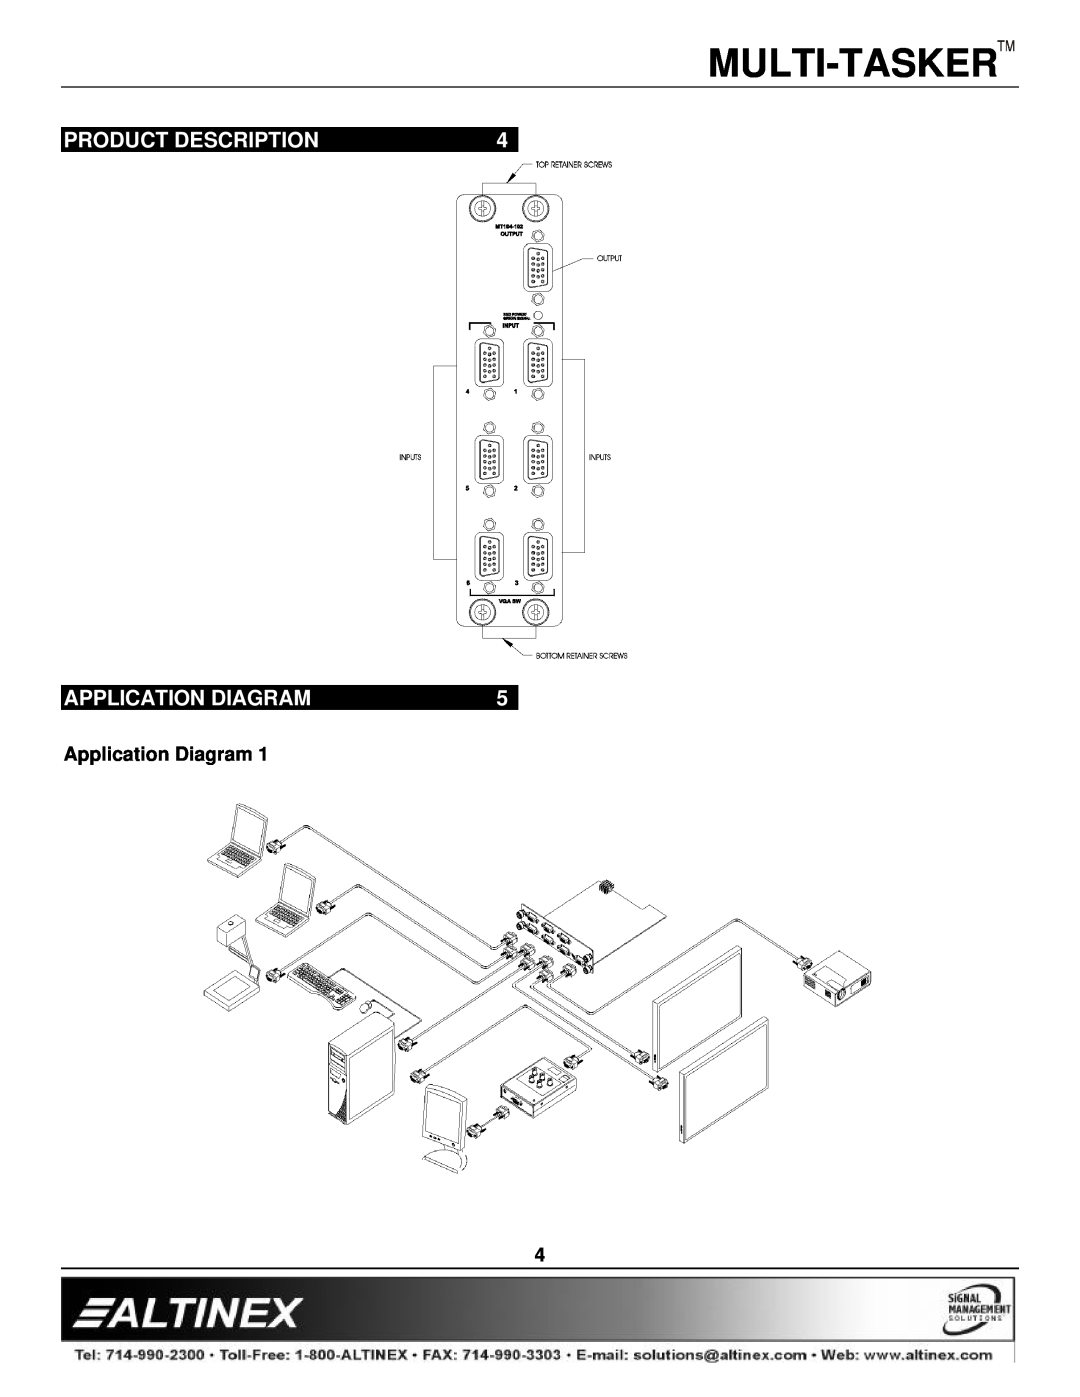 Altinex MT104-102 manual Product Description, Application Diagram, Multi-Tasker 